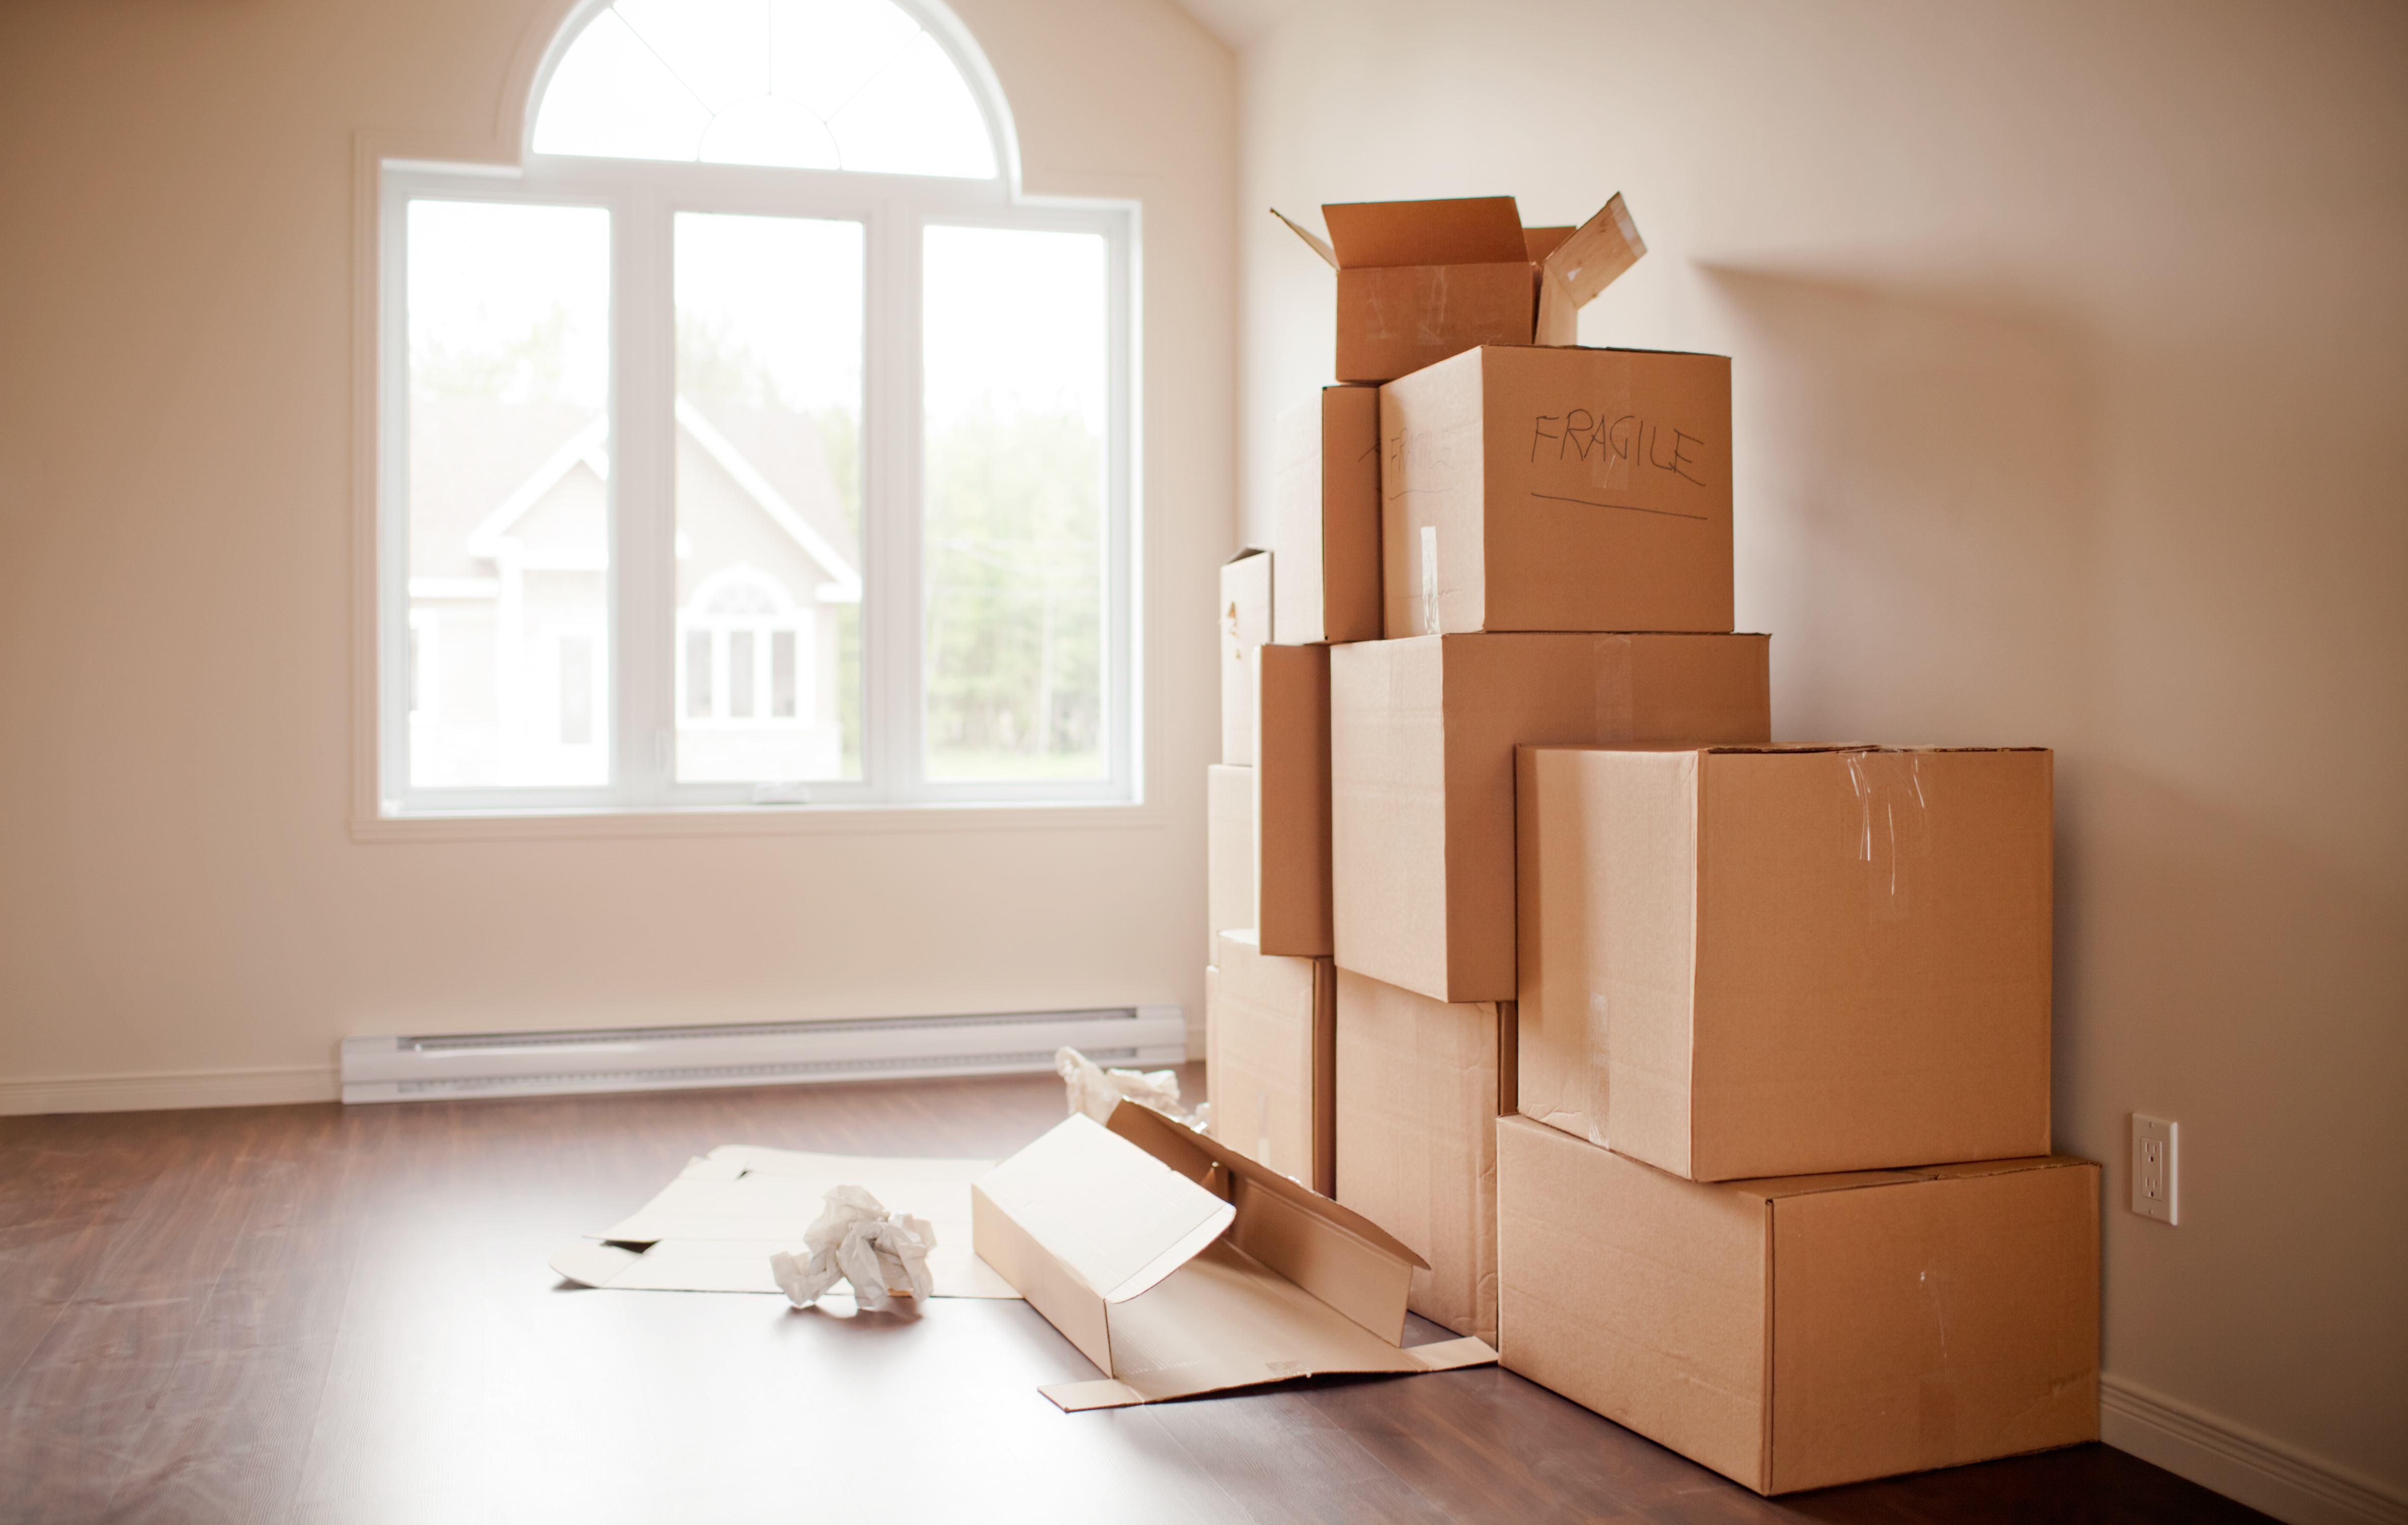 Сколько стоит квартирный переезд. Коробки в квартире. Комната с коробками. Новая квартира коробки. Коробки в комнате.